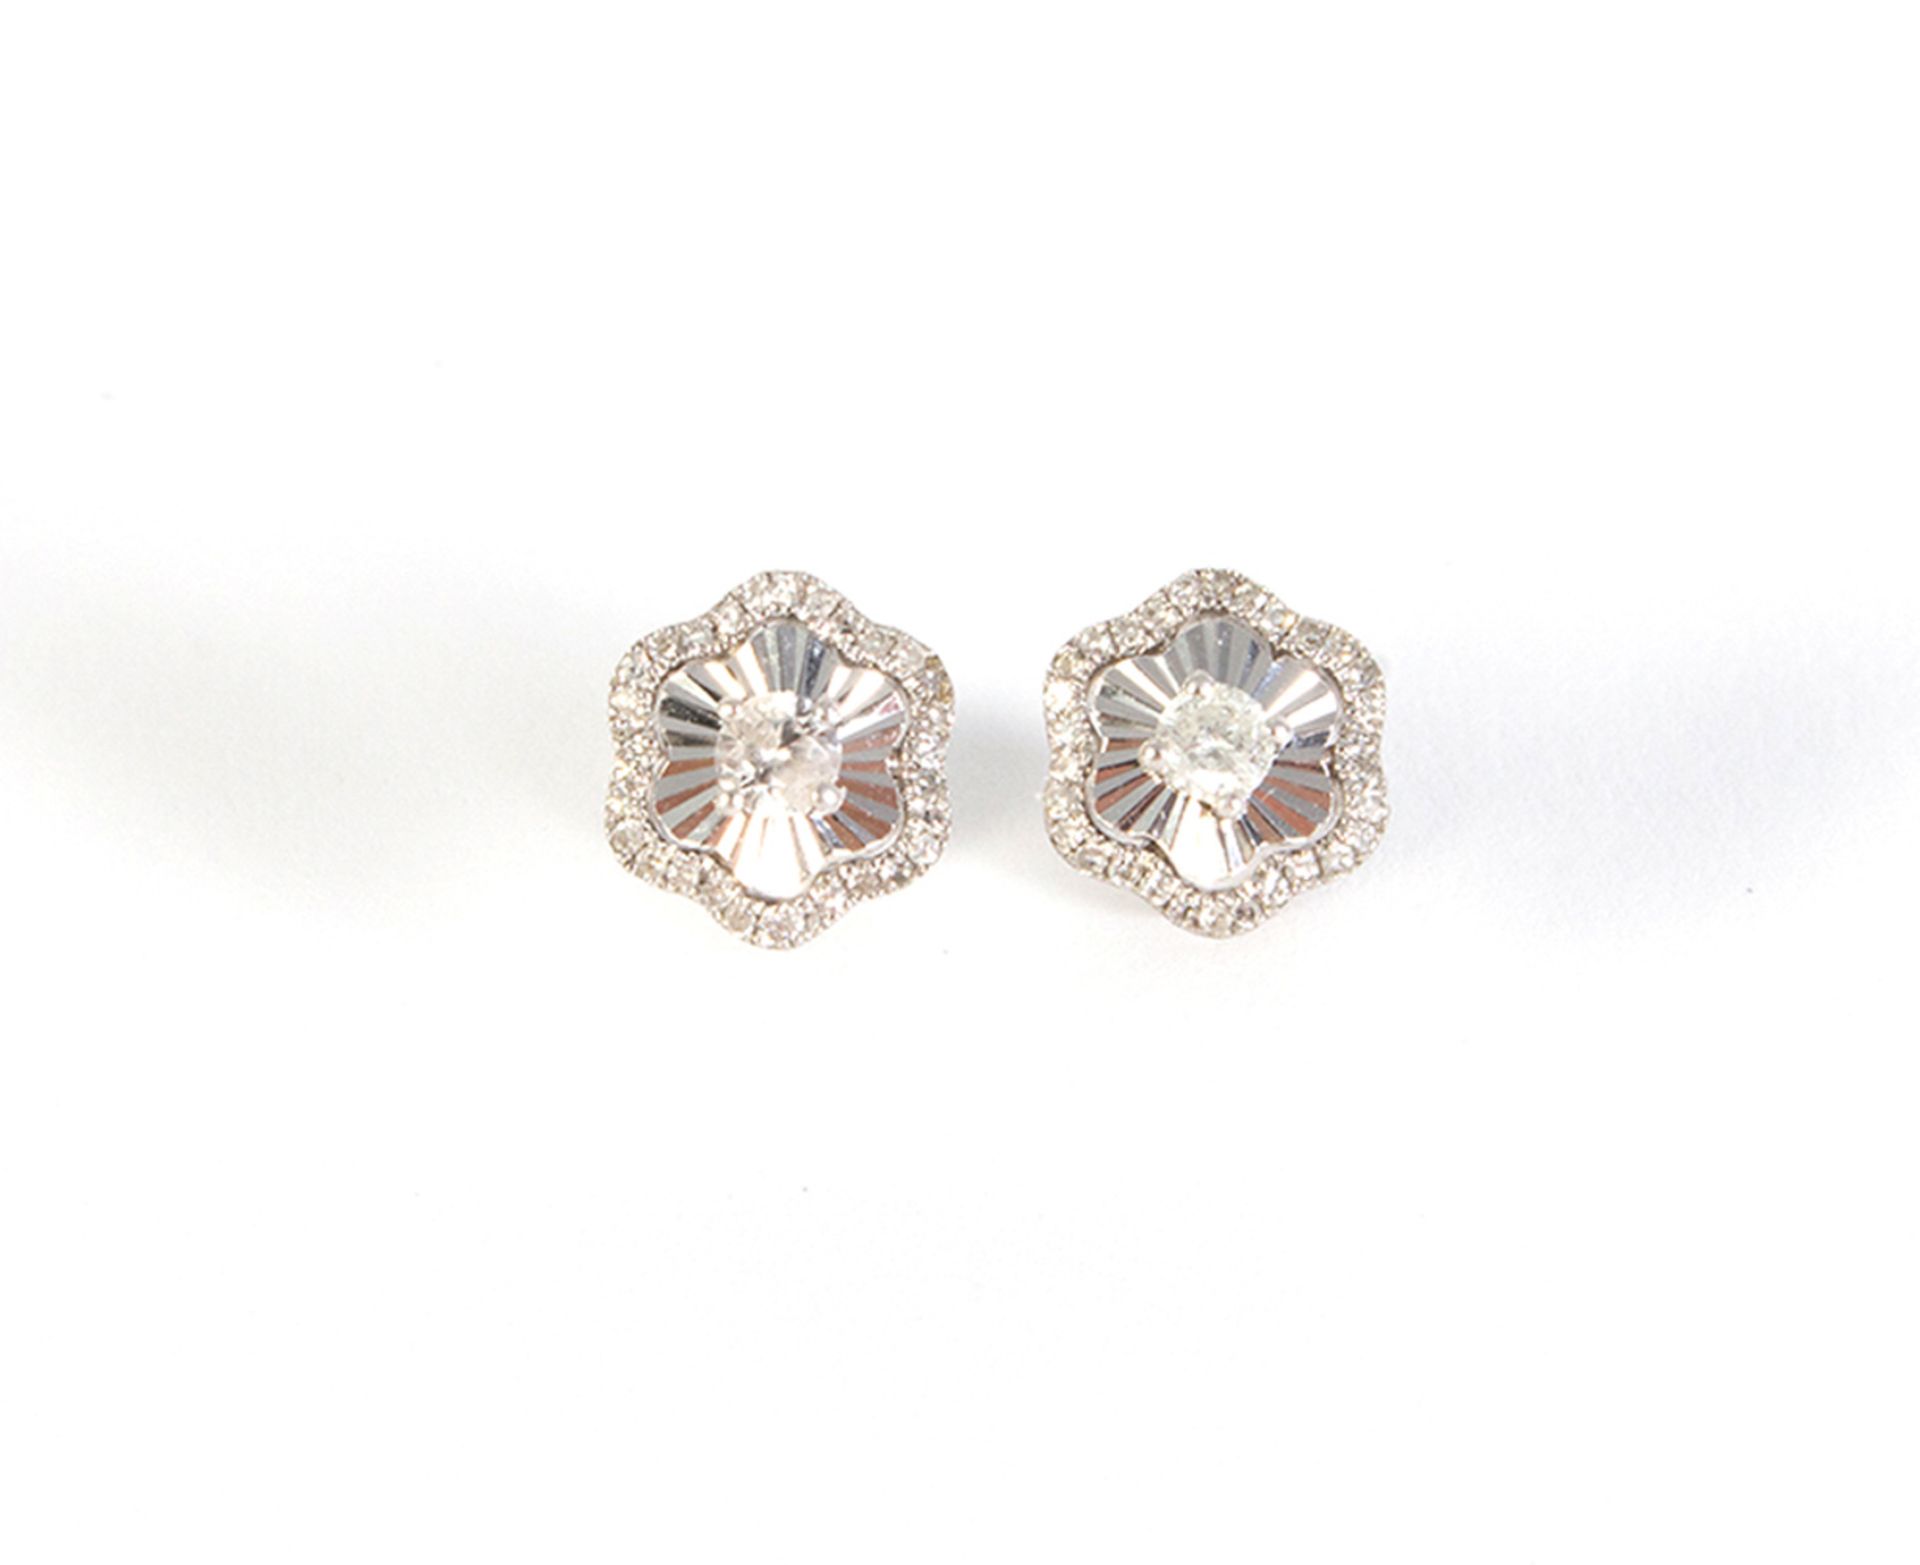 White flower earrings and brilliant cut diamonds.